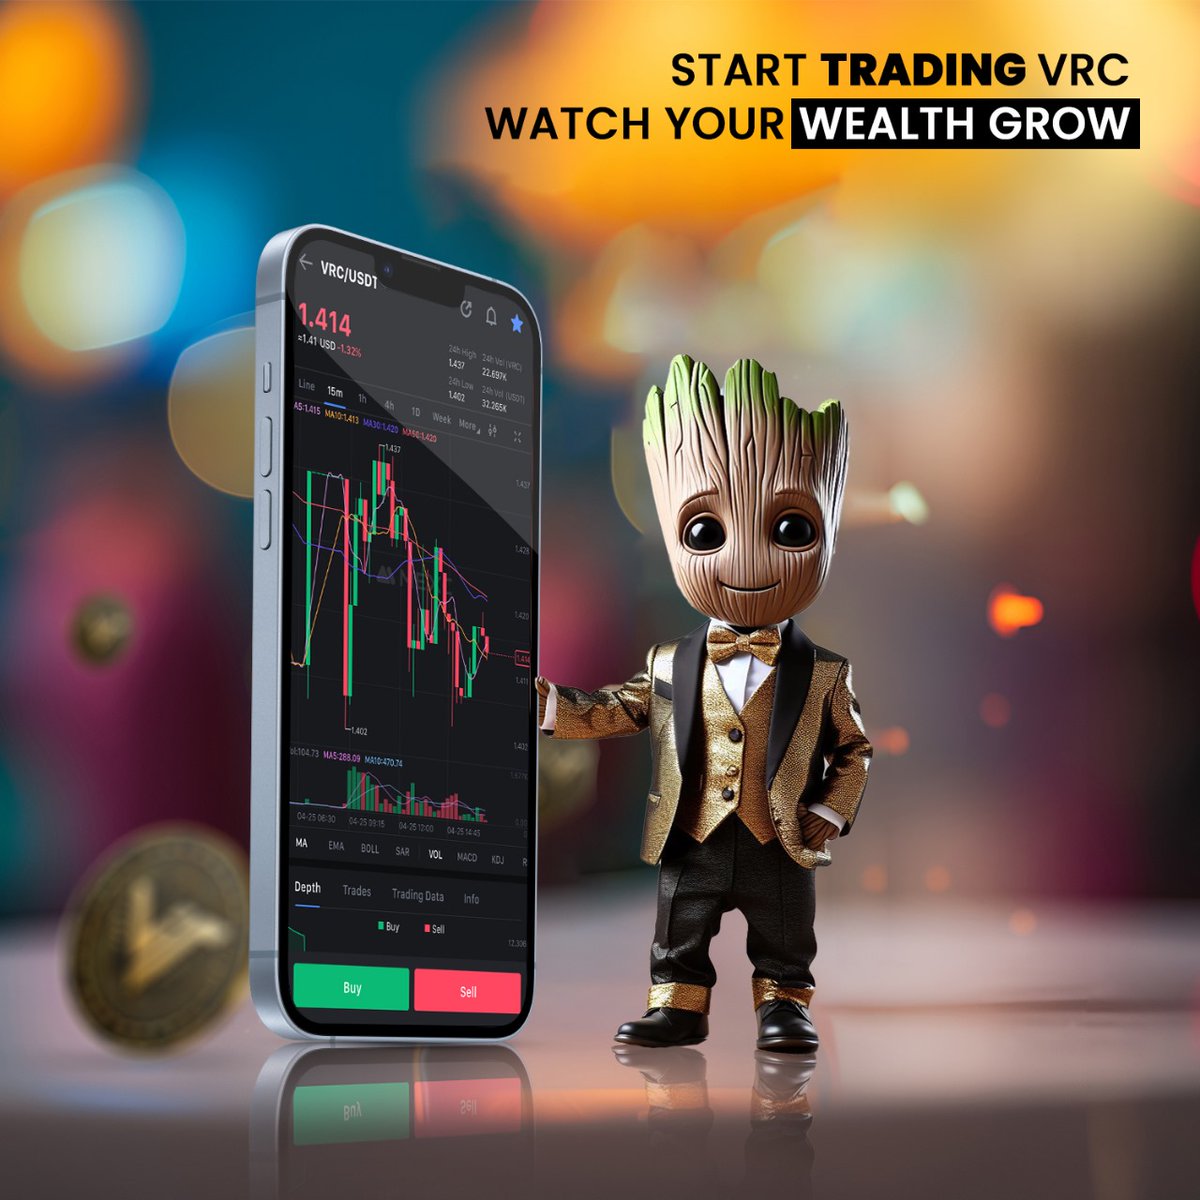 Start trading VRC today! Every cent of profit boosts your earnings.

#VRC #BTC #USDT #Bitcoin #cryptomarket #Blockchain #Staking #trading  #VRCCoin #EthereumETF #VanEck #SEC #WisdomTree #SOLETF